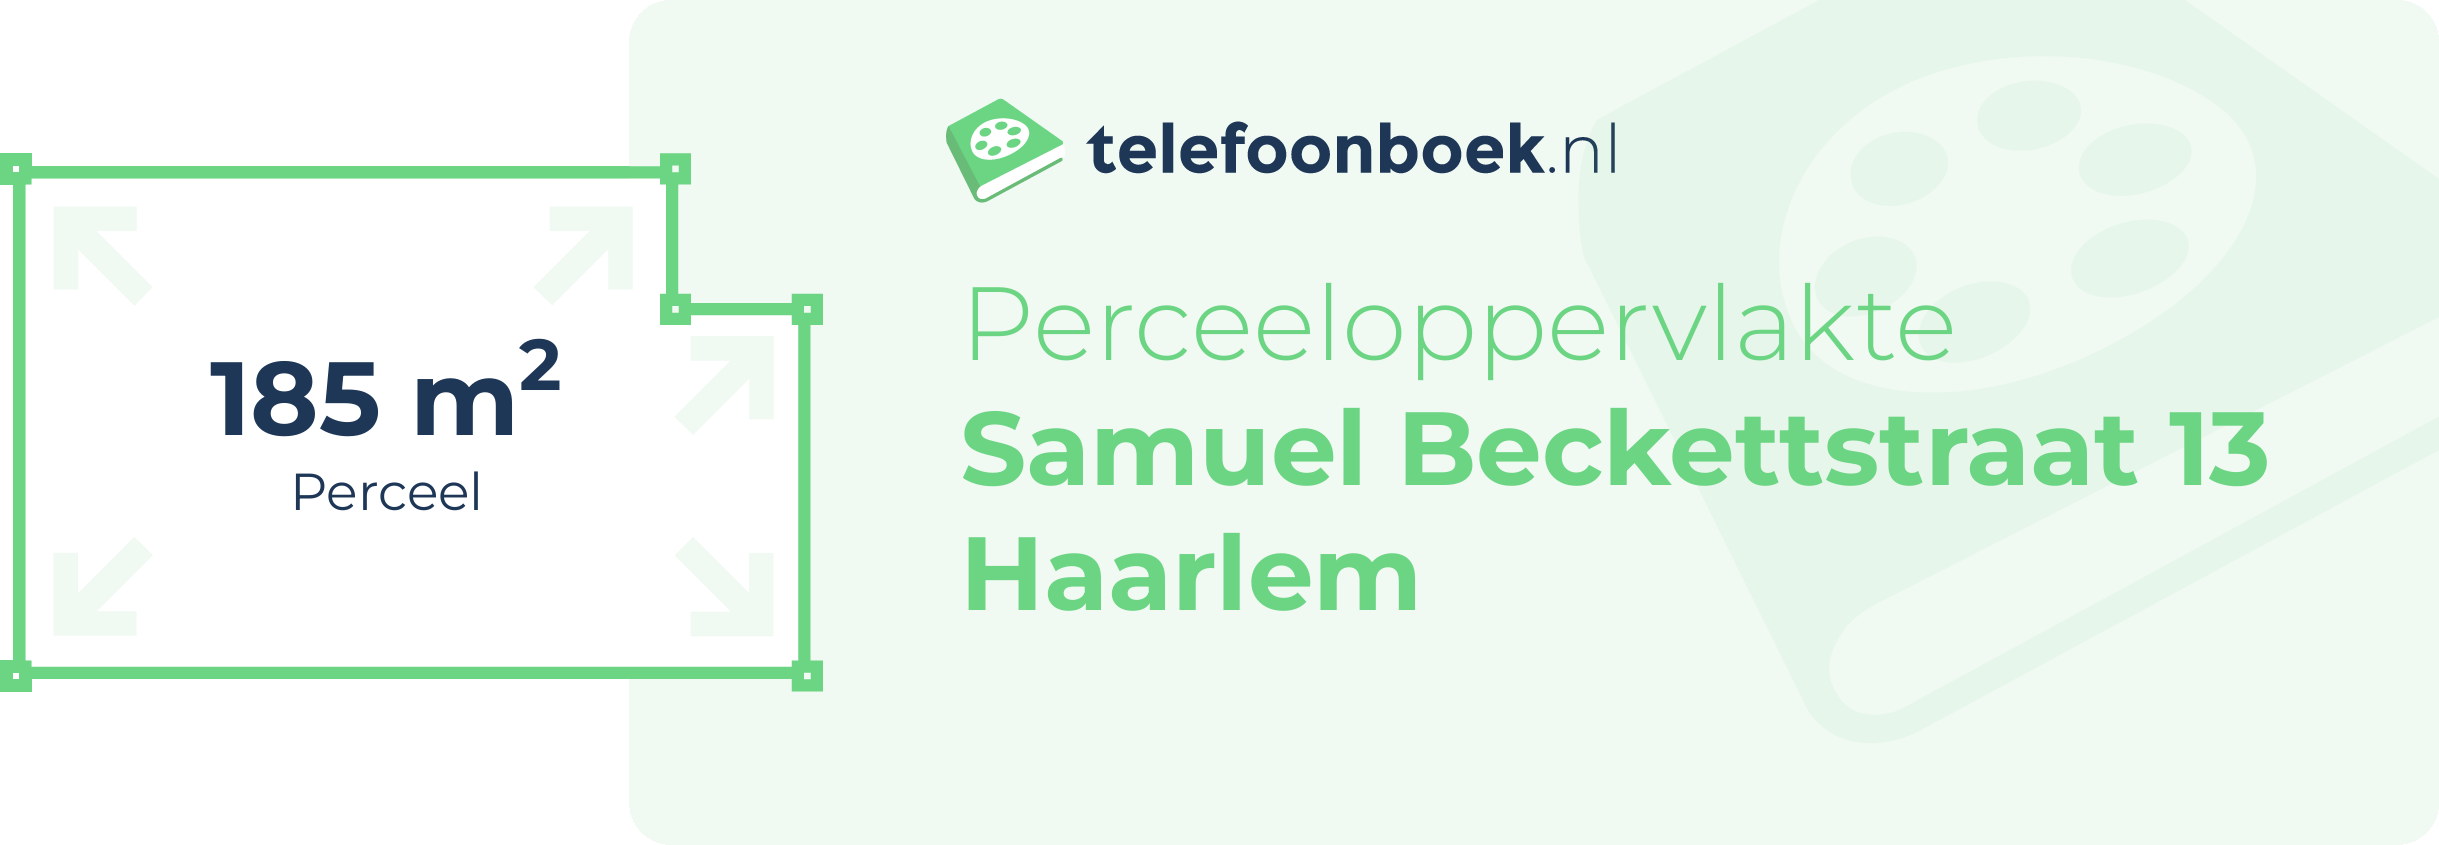 Perceeloppervlakte Samuel Beckettstraat 13 Haarlem